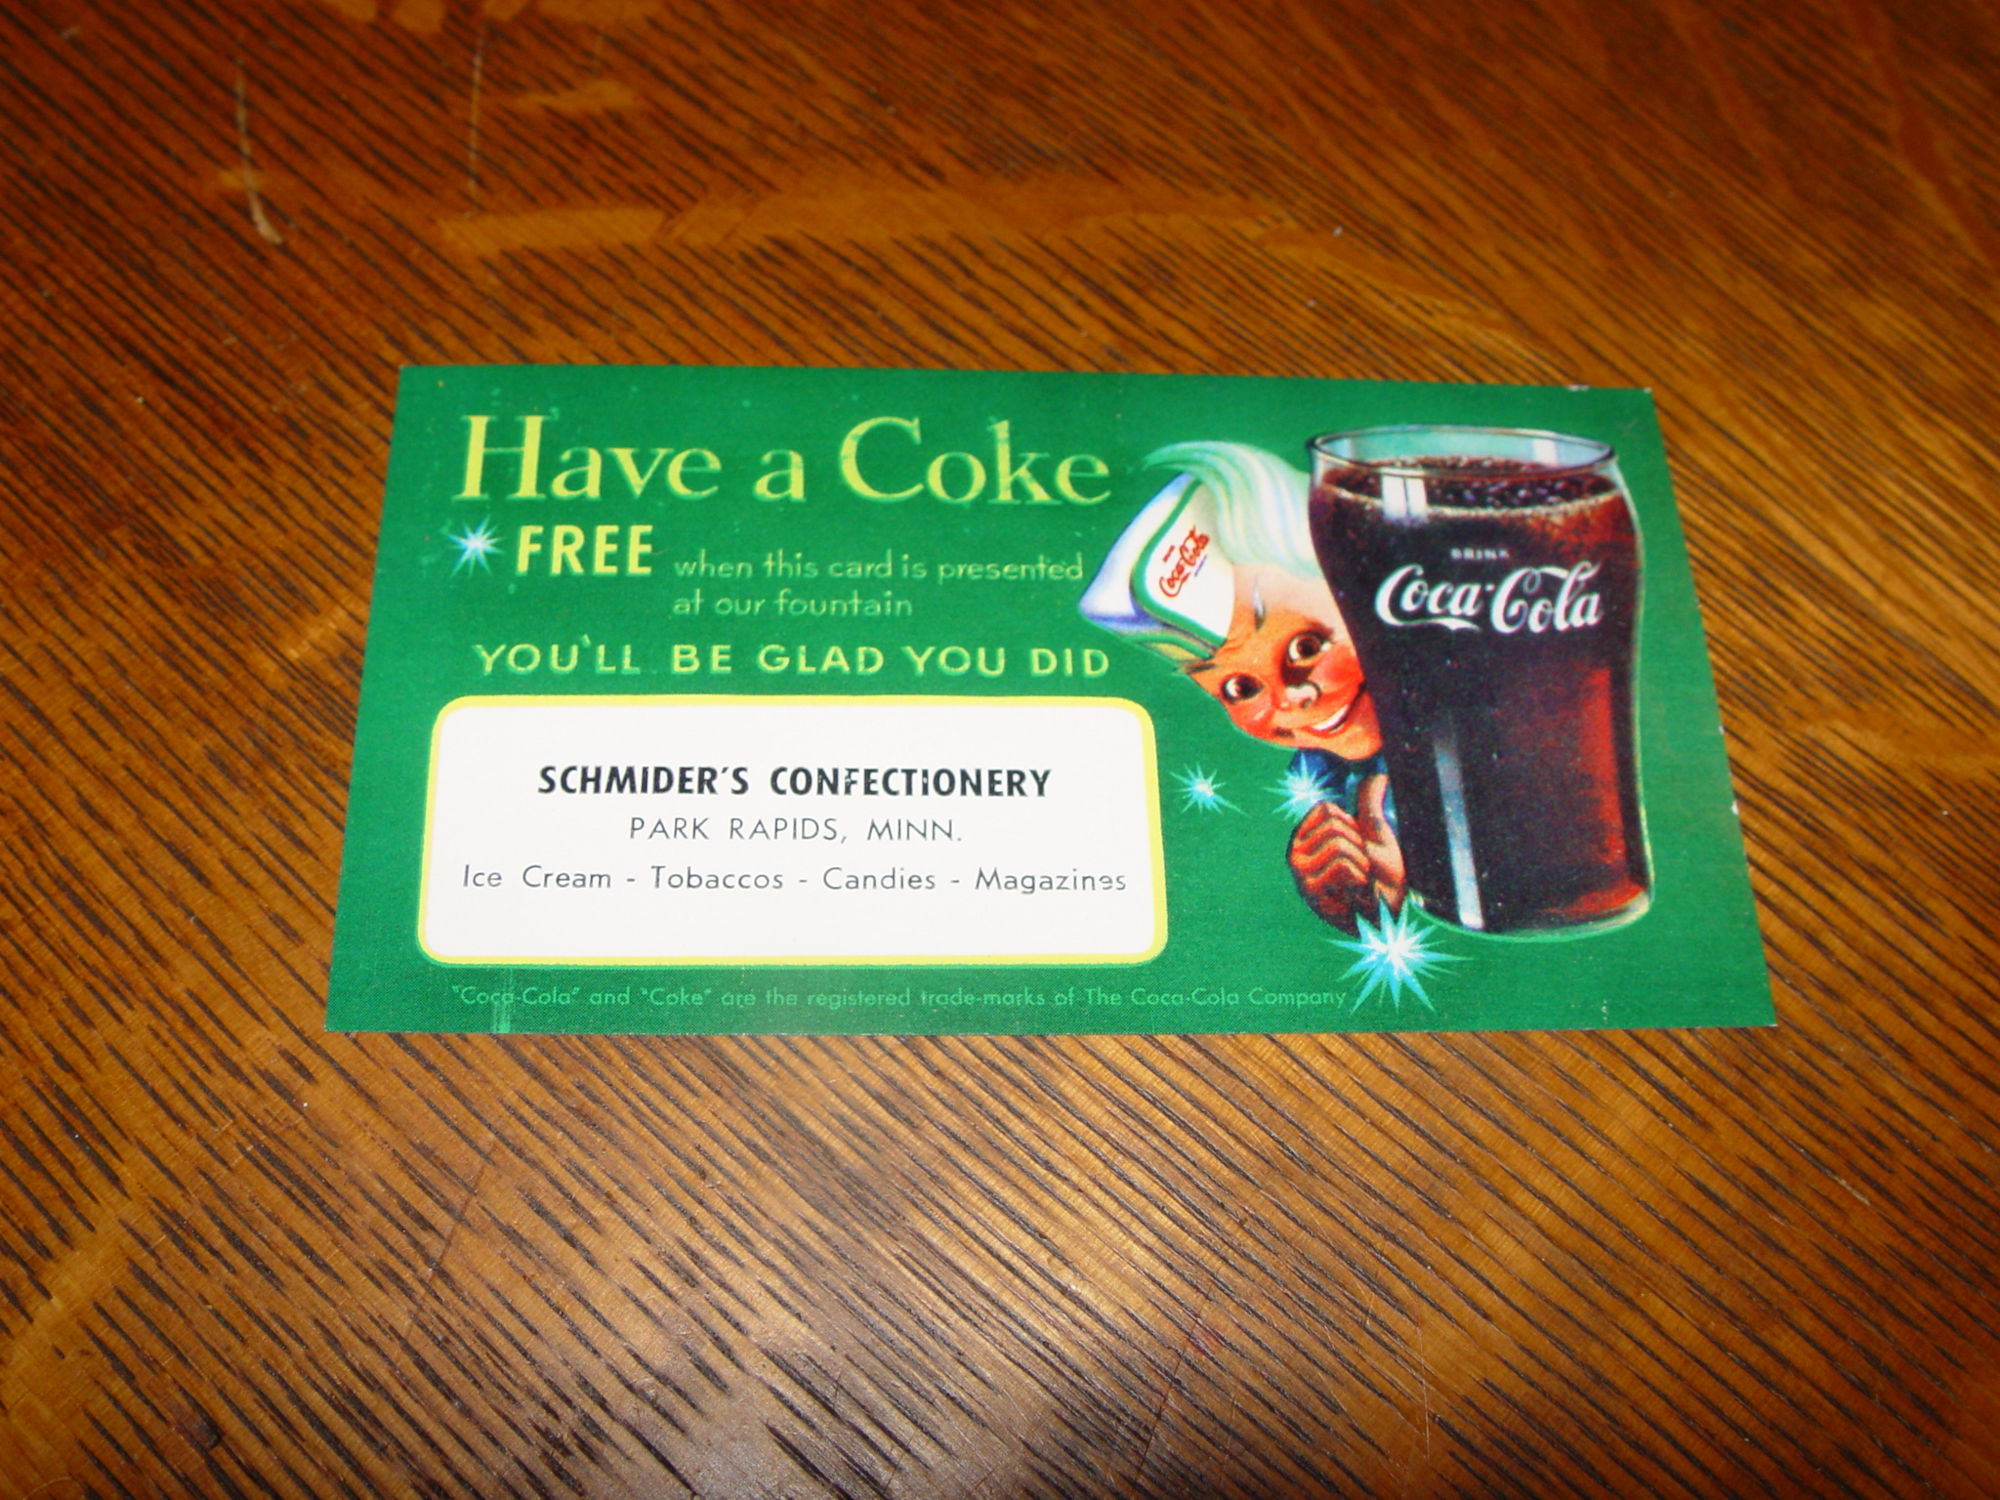 Original Sprite
                        Boy Free Coca Cola - Schmider's Confectionery
                        Park Rapids MN